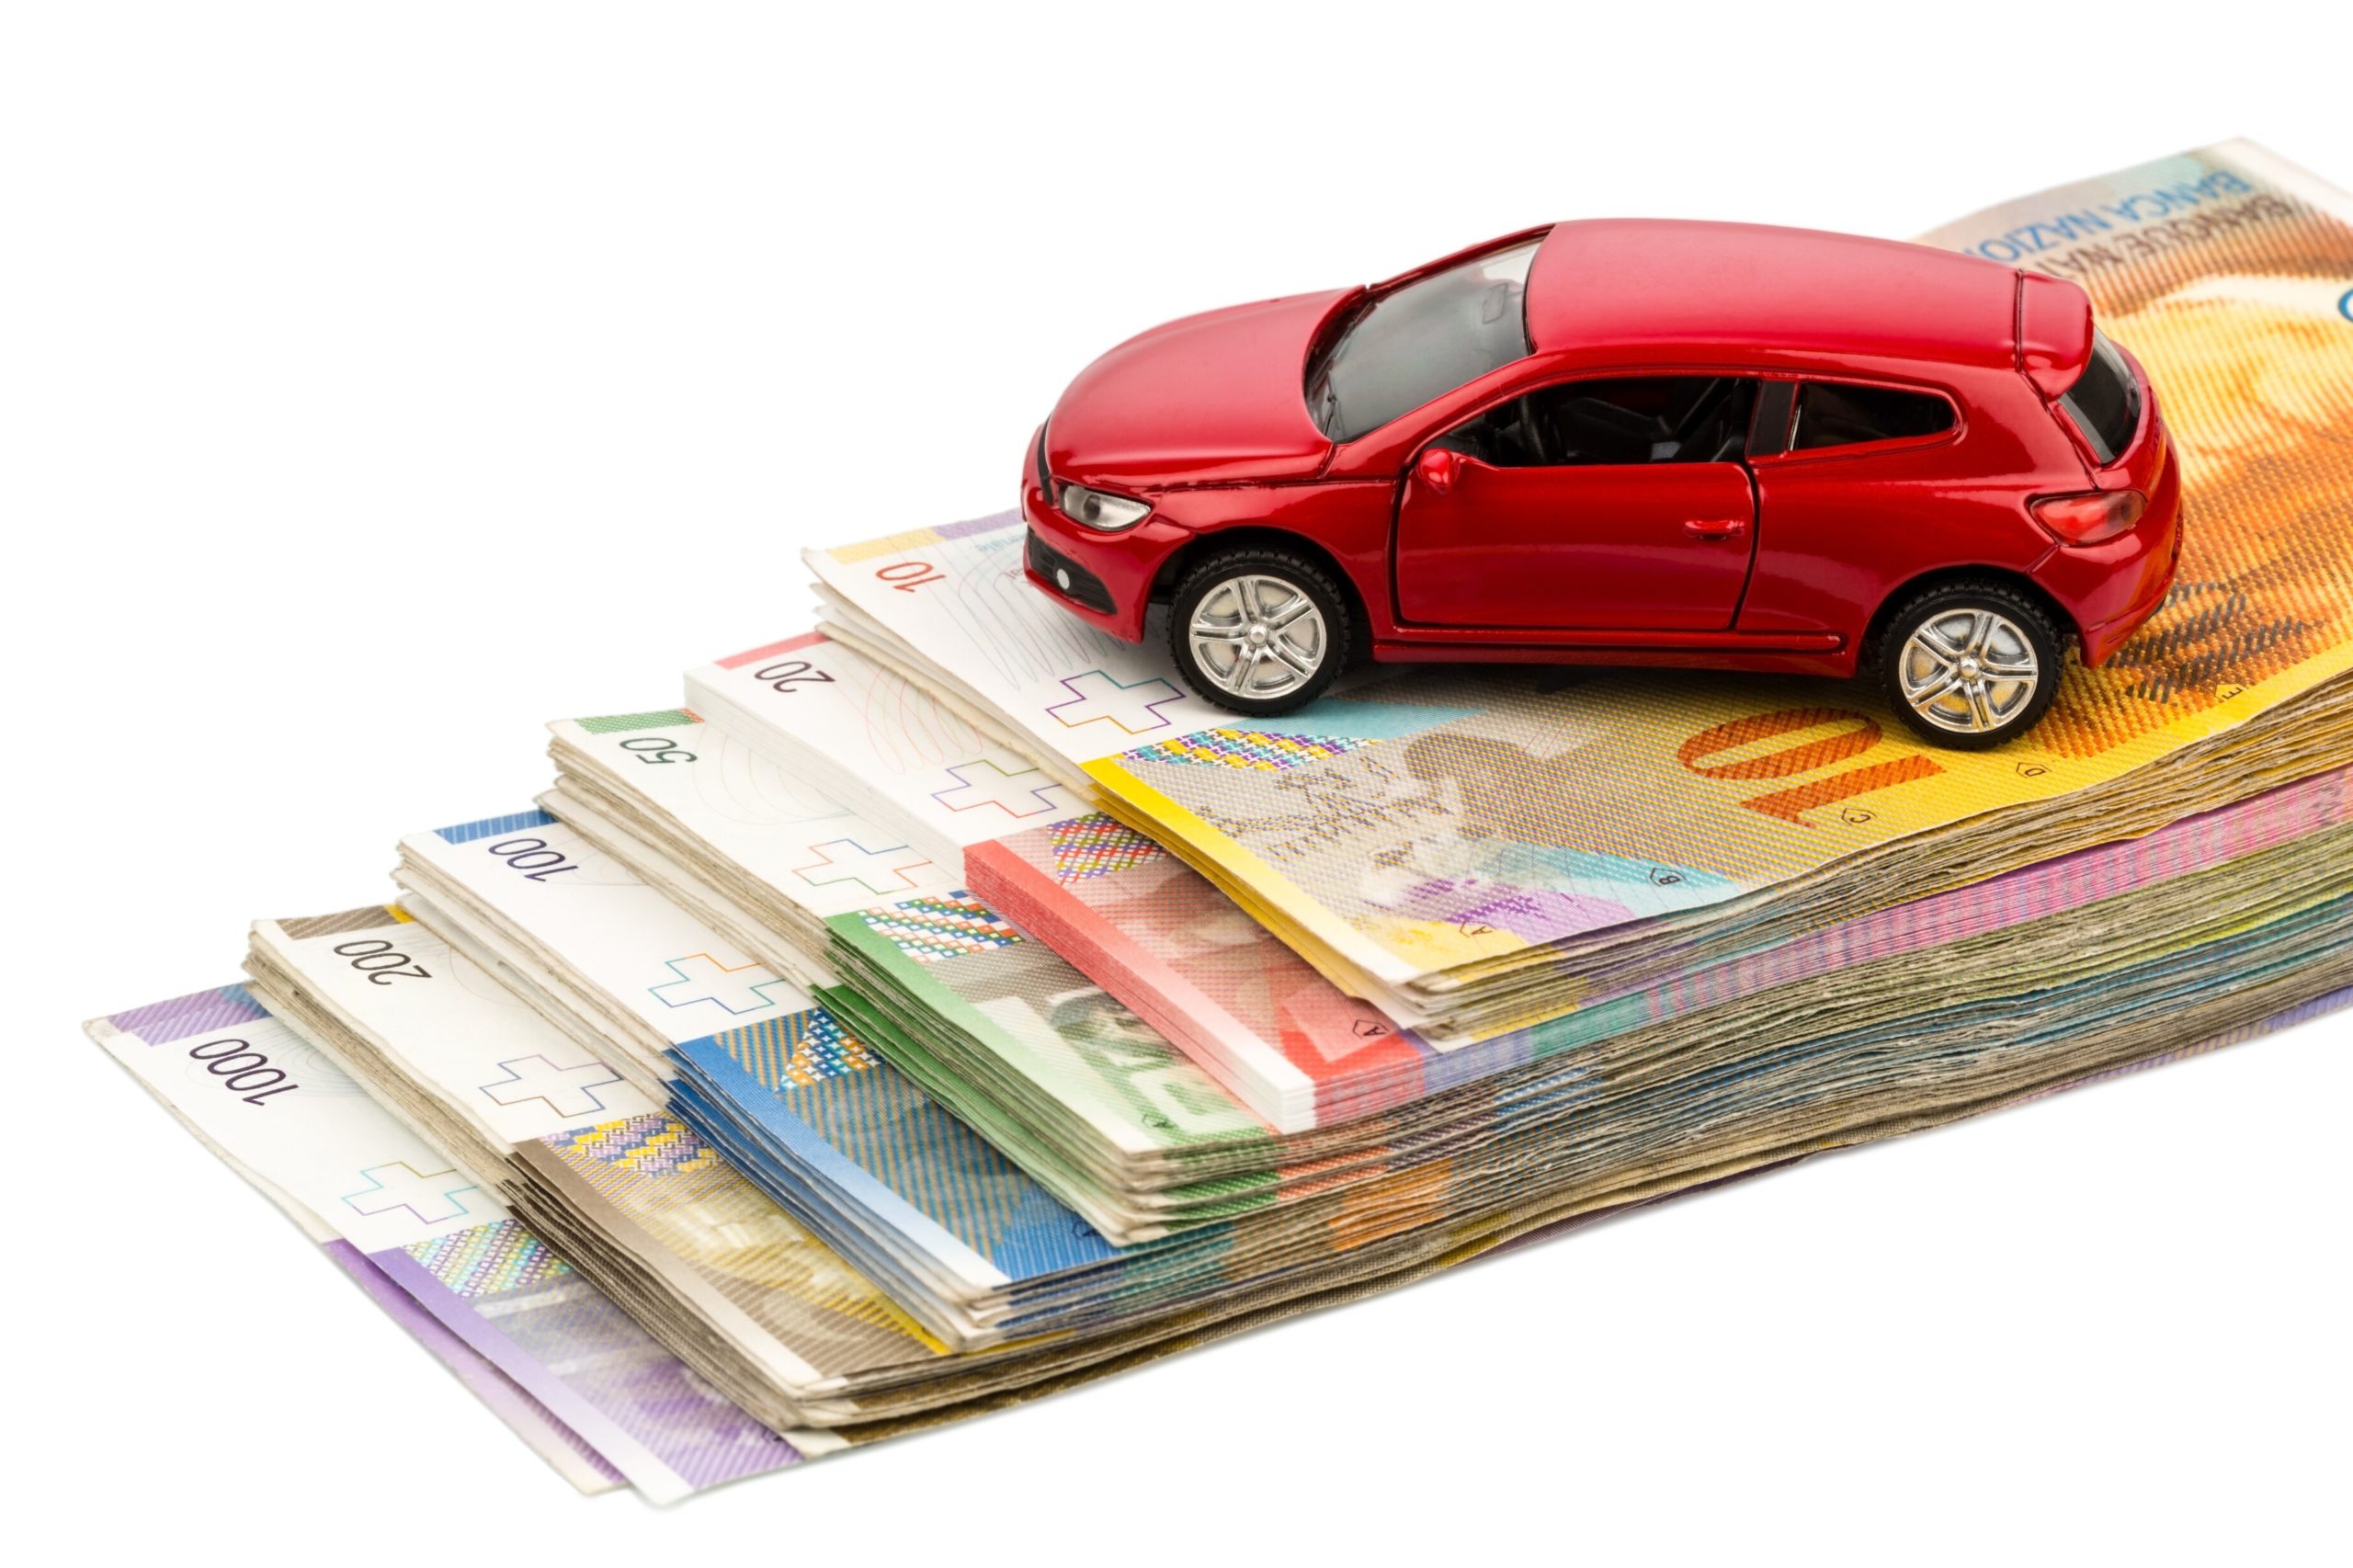 ACEA: ‘Car taxes bring in €440,4 billion in 14 major EU markets’